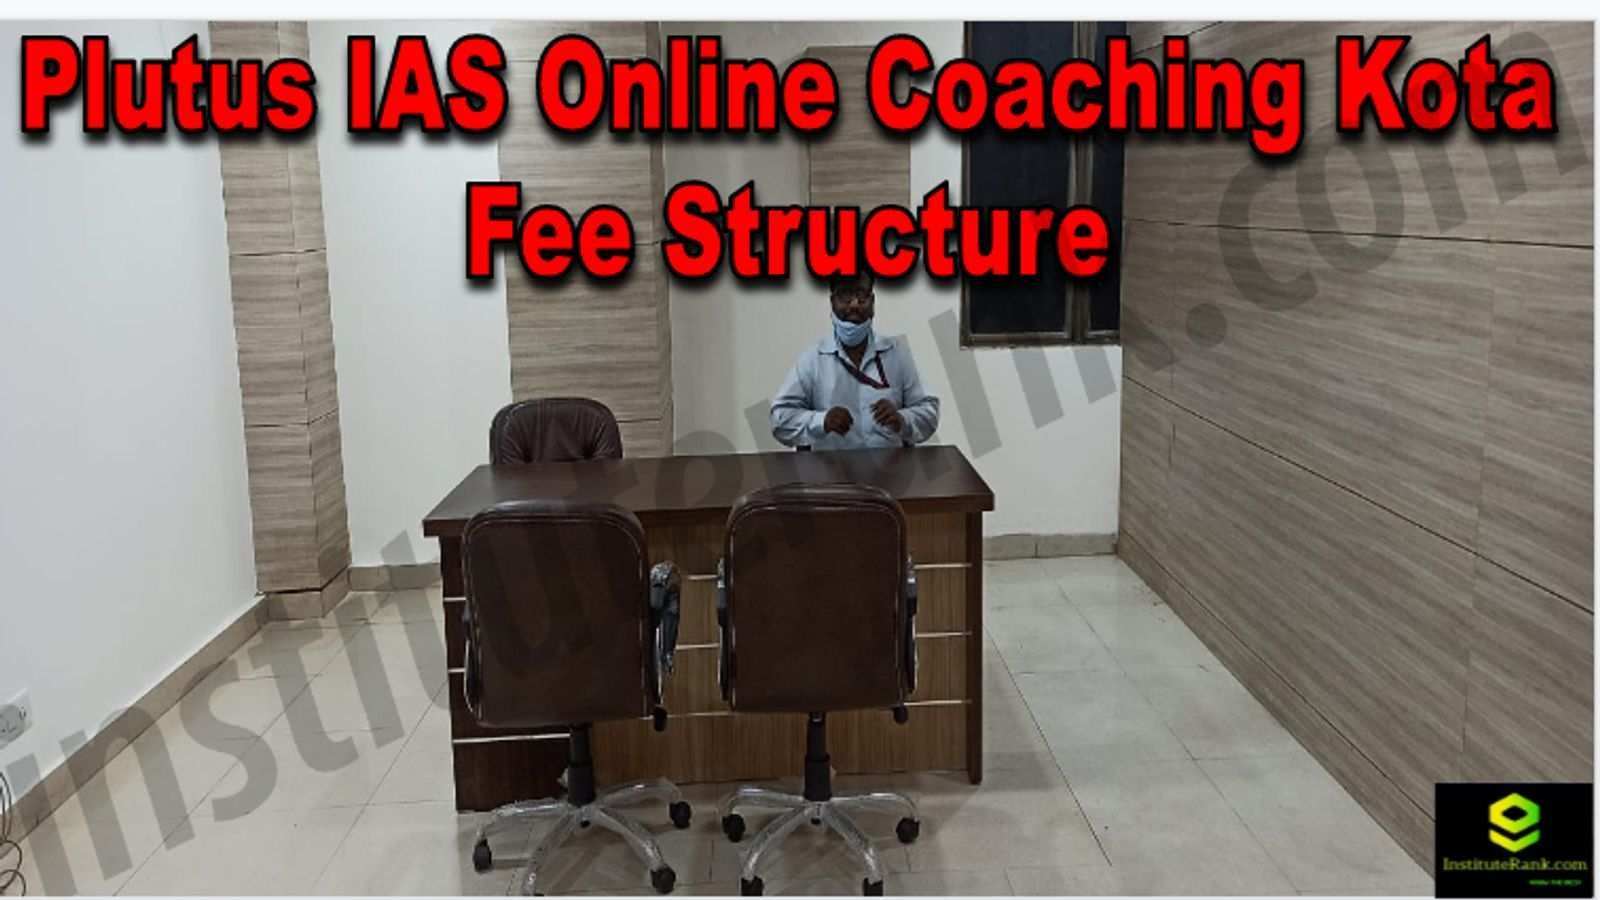 Plutus IAS Online Coaching Kota Reviews Fee Structure